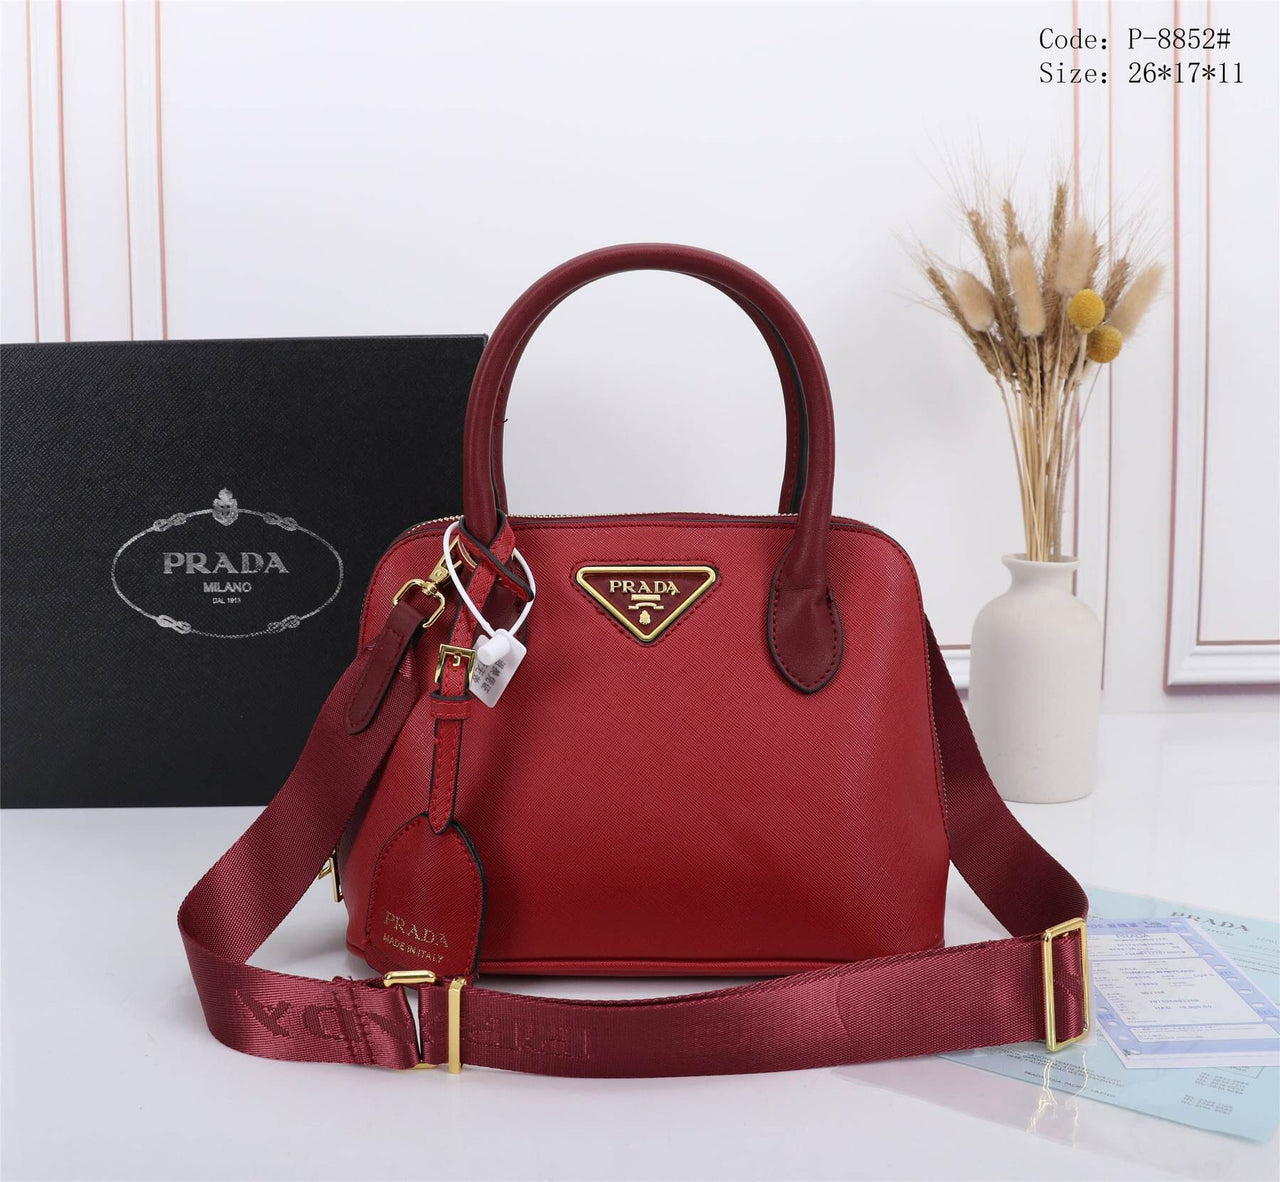 PRD8852 Leather Handbag Top Handle with Sling